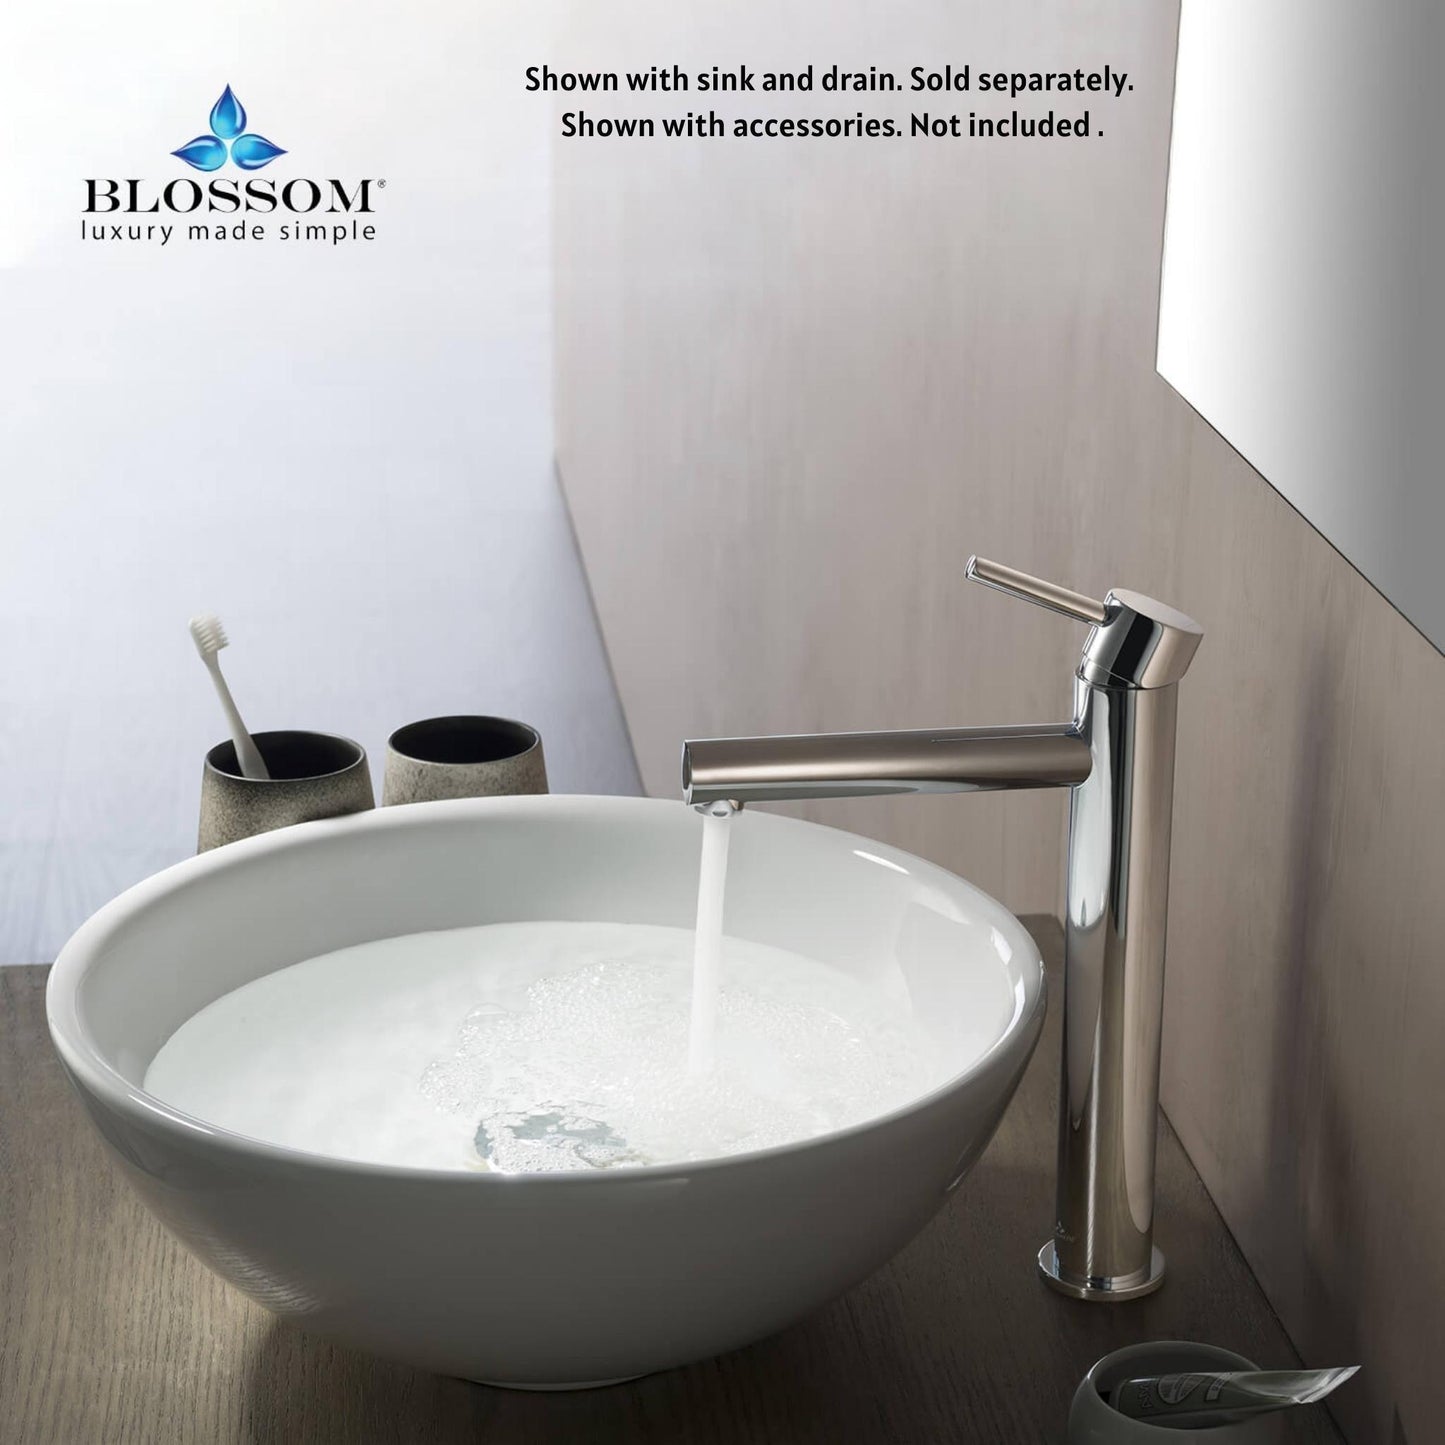 Blossom F01 117 7" x 12" Chrome Lever Handle Bathroom Sink Single Hole Faucet